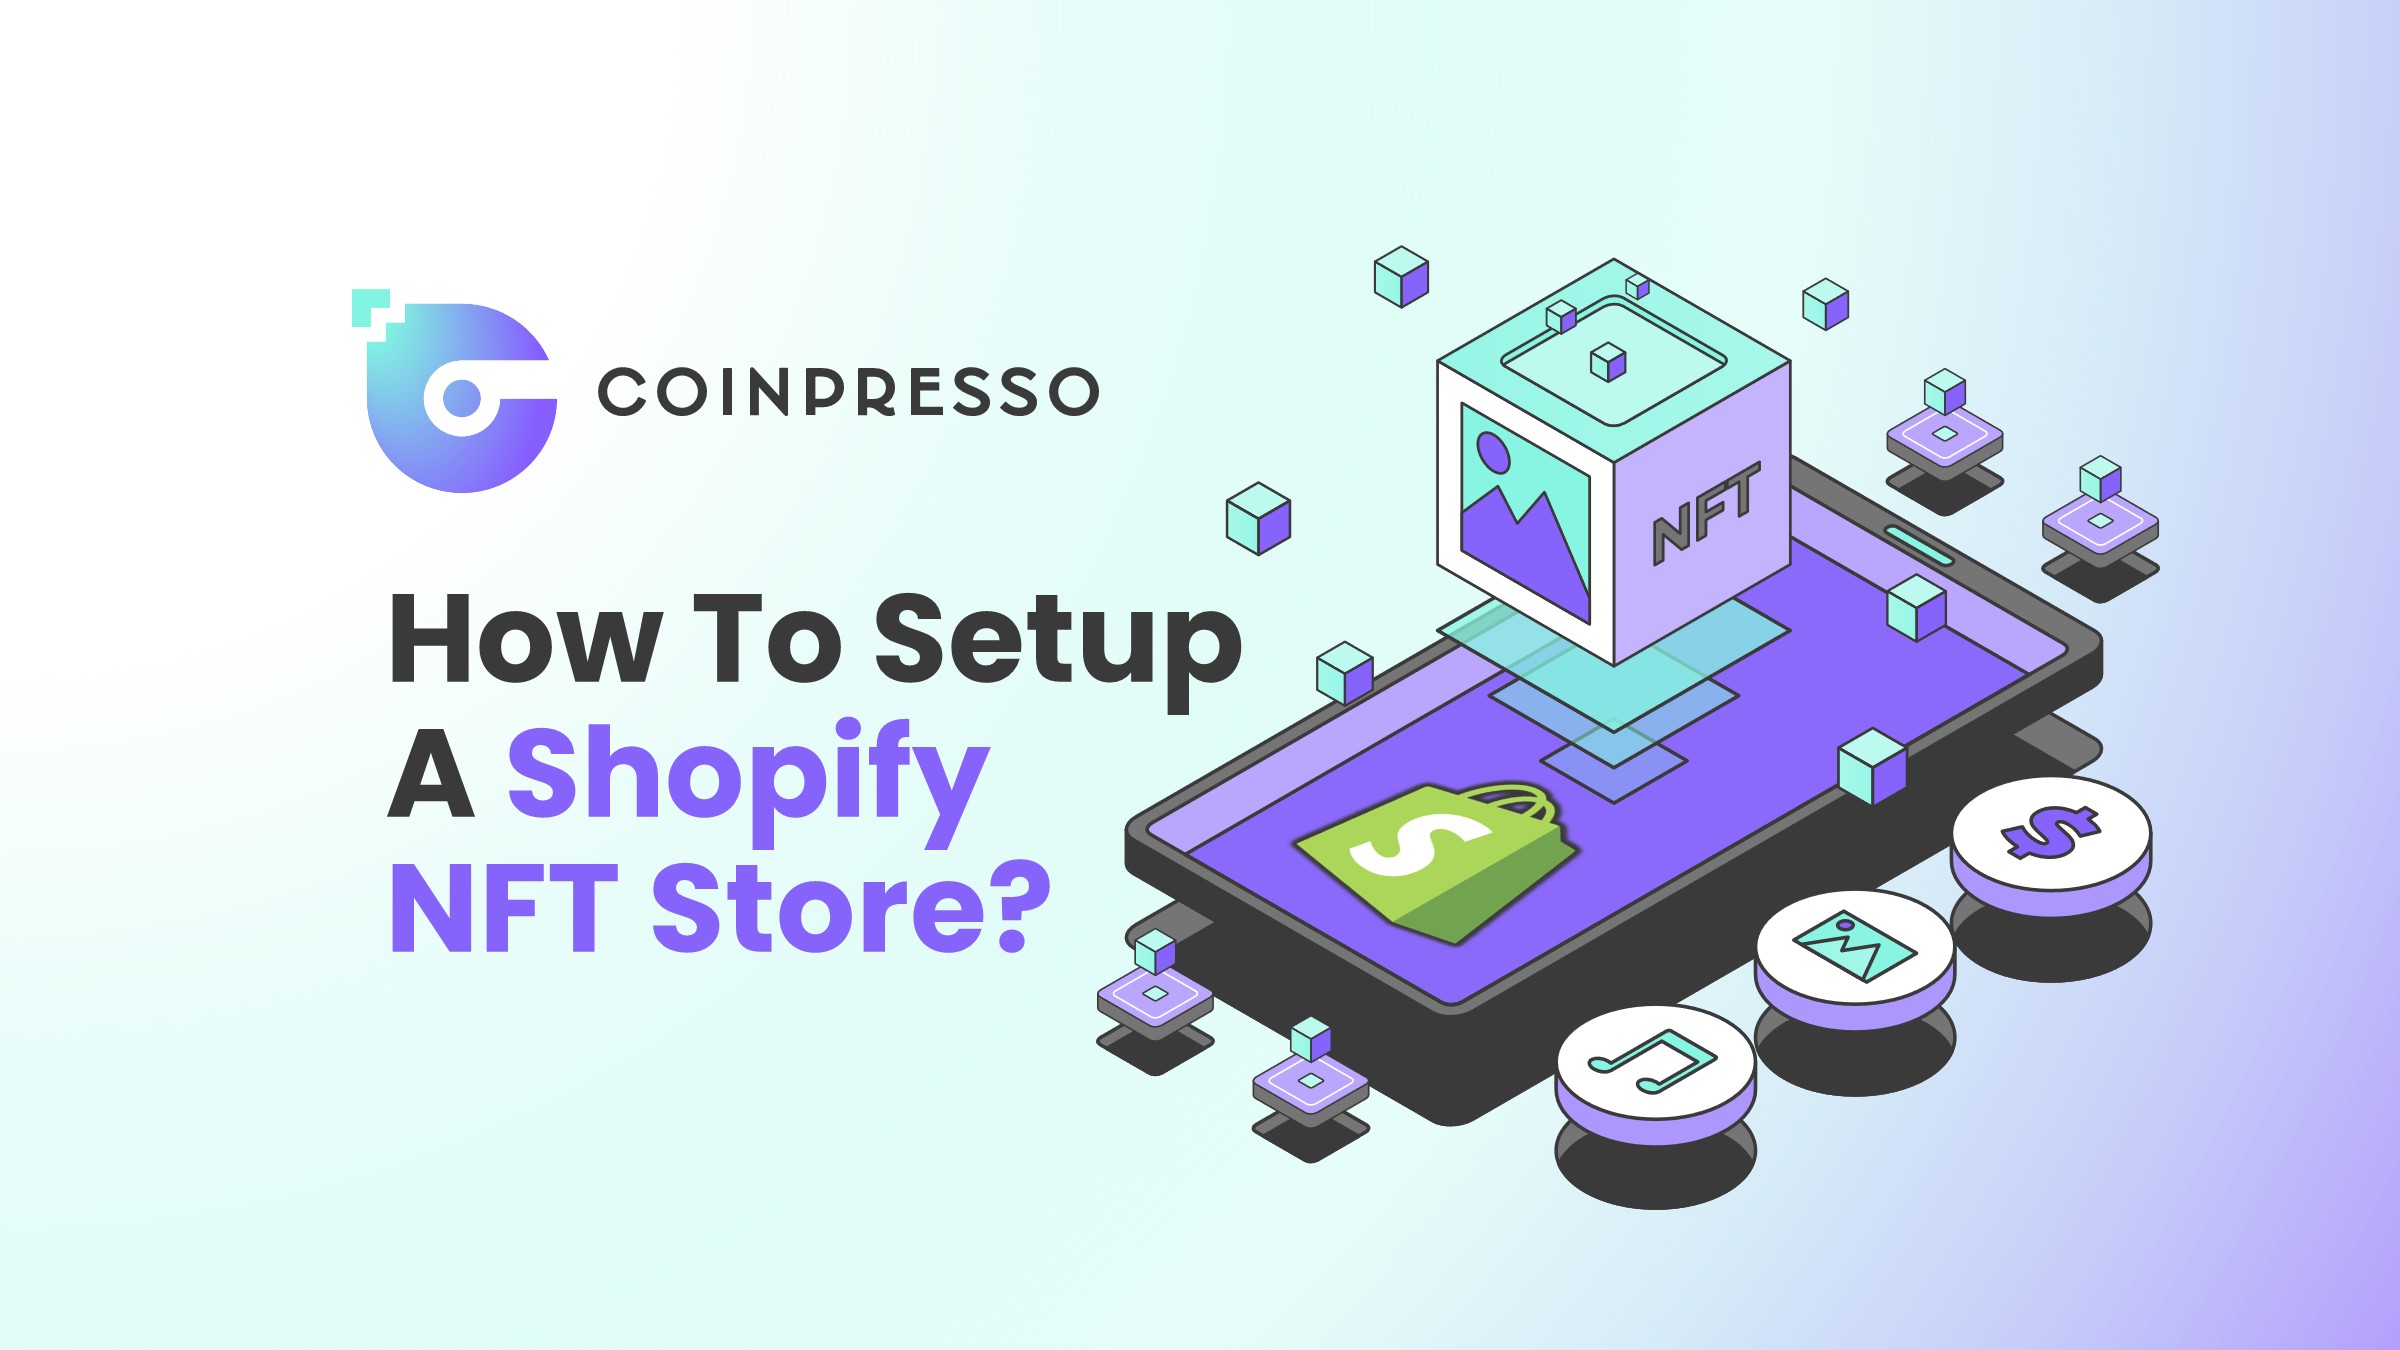 How To Setup A Shopify NFT Store